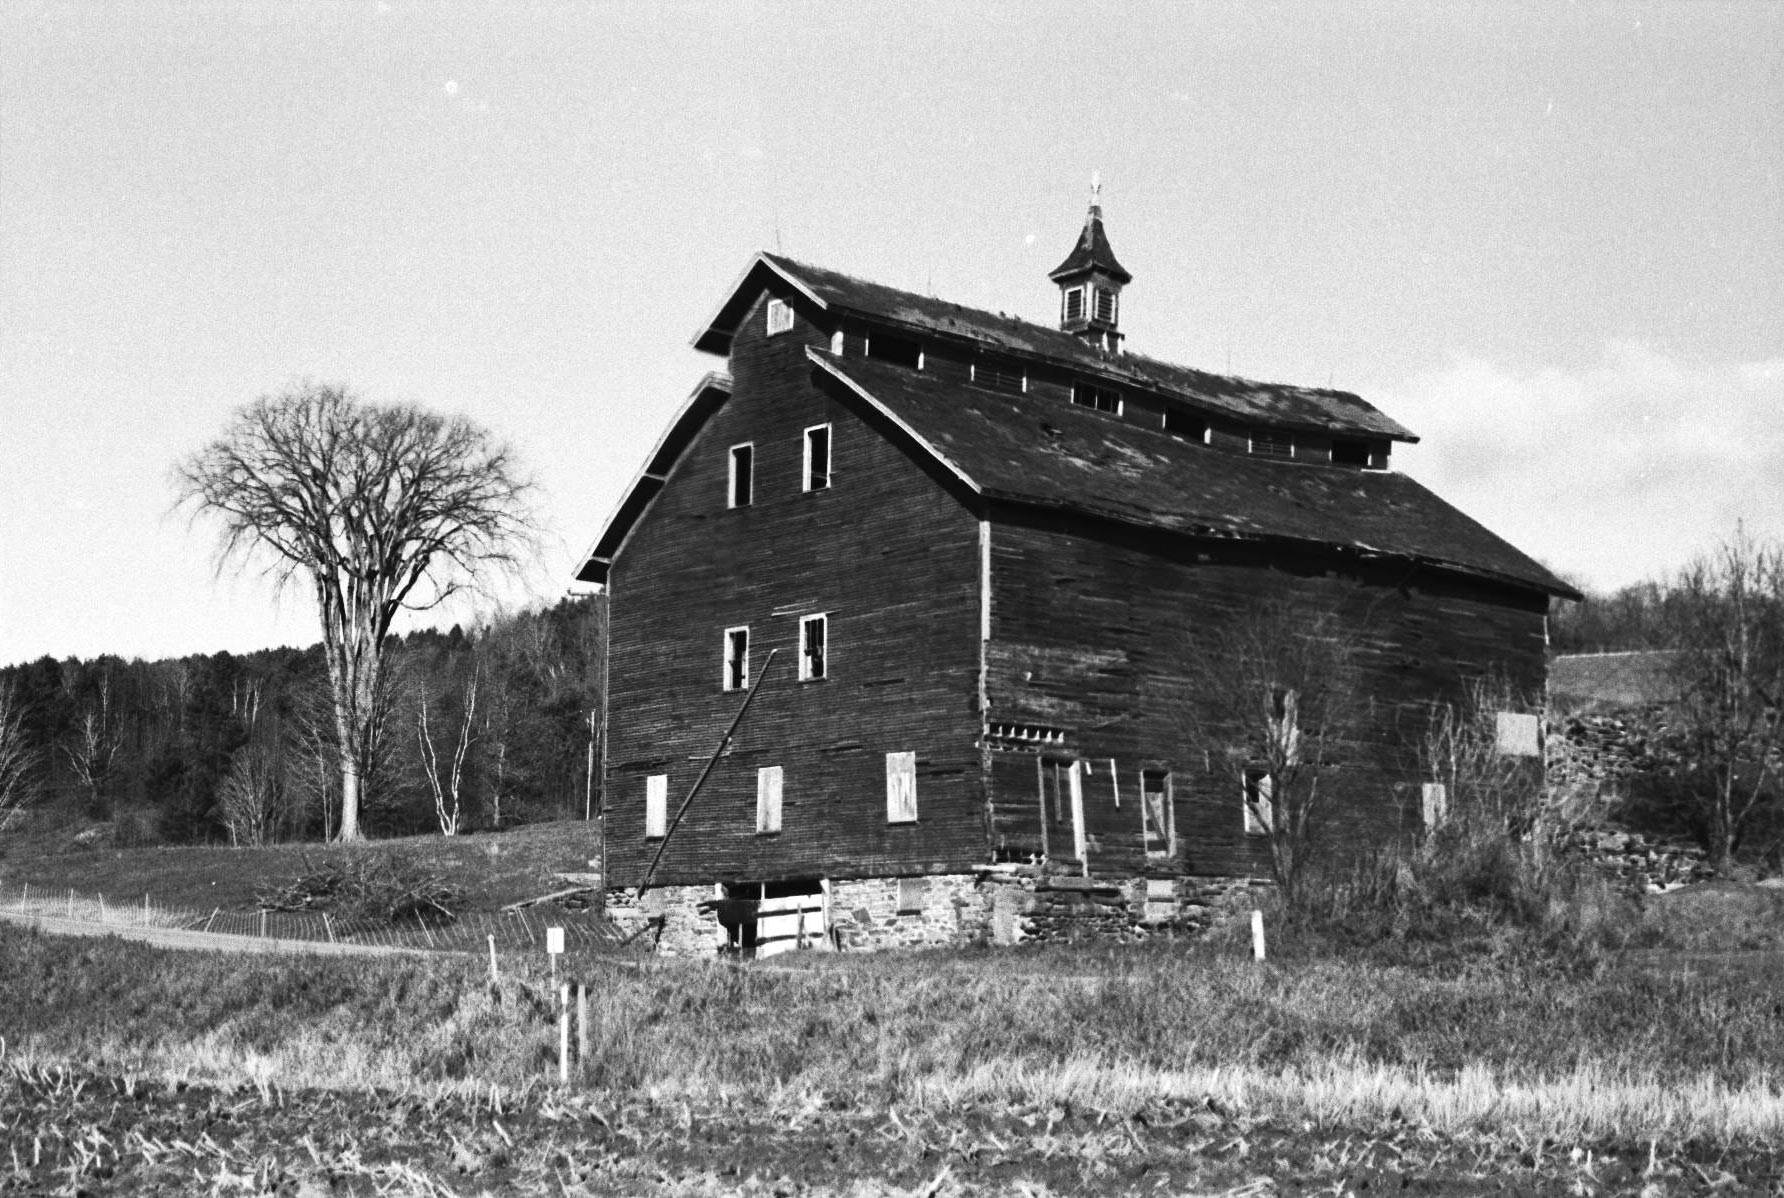 Archival barn photo